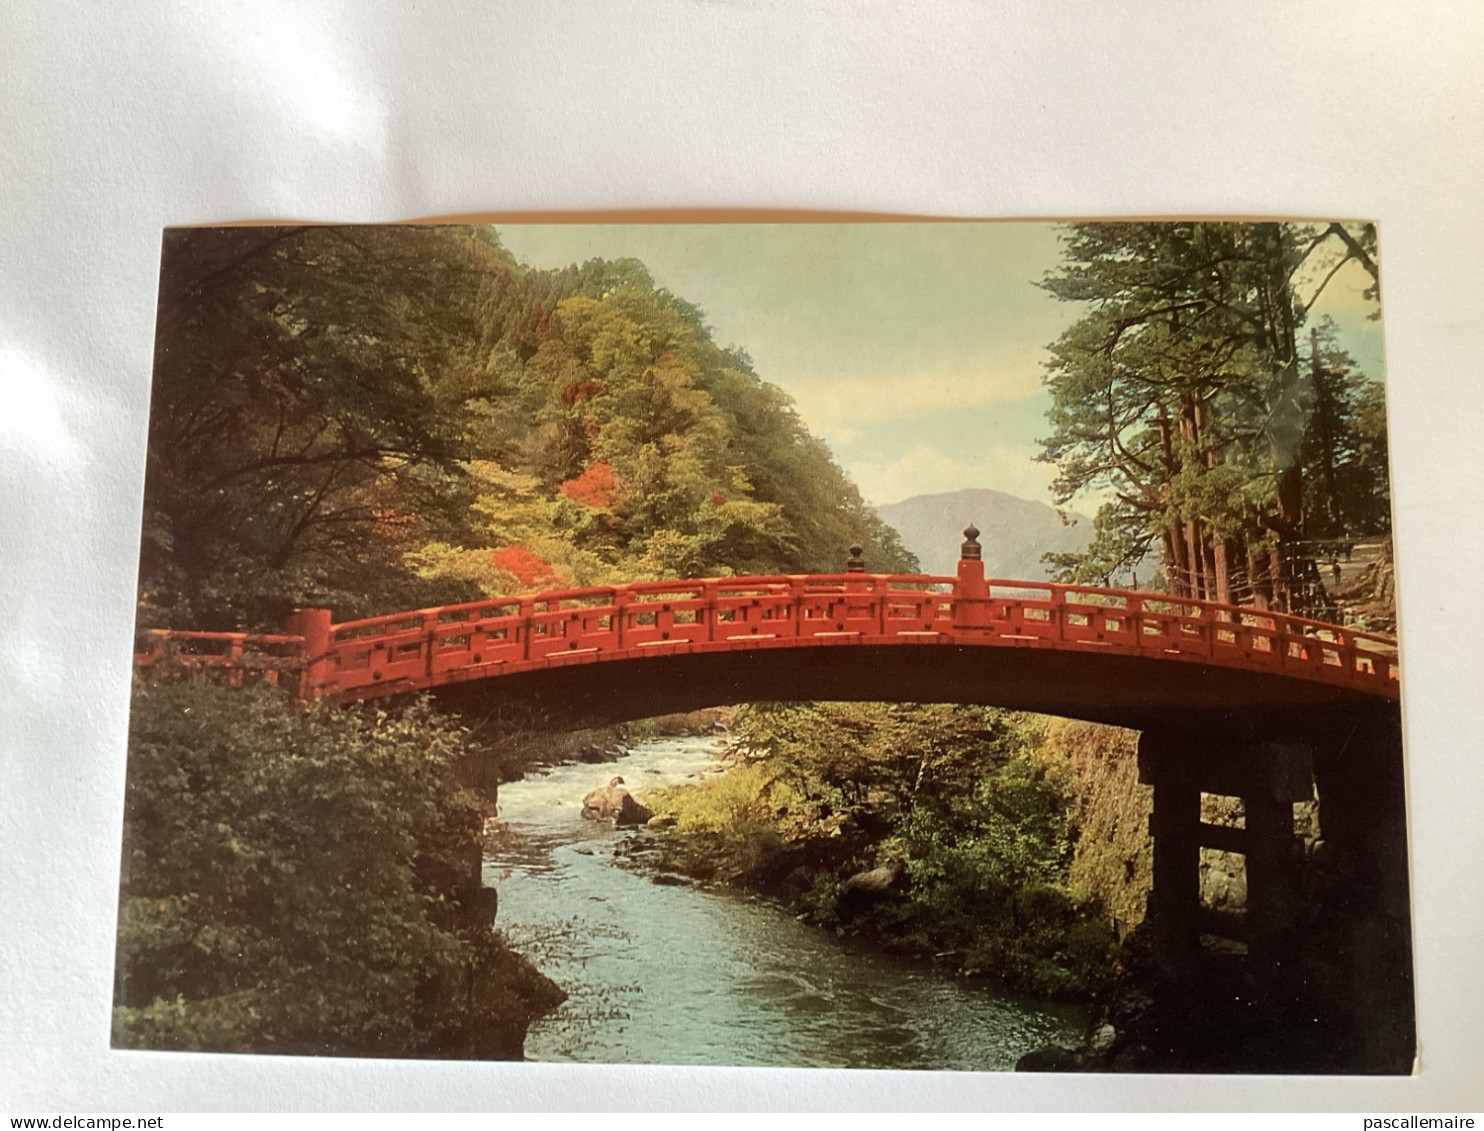 8 cartes postales Nikko Toshogu année 1960